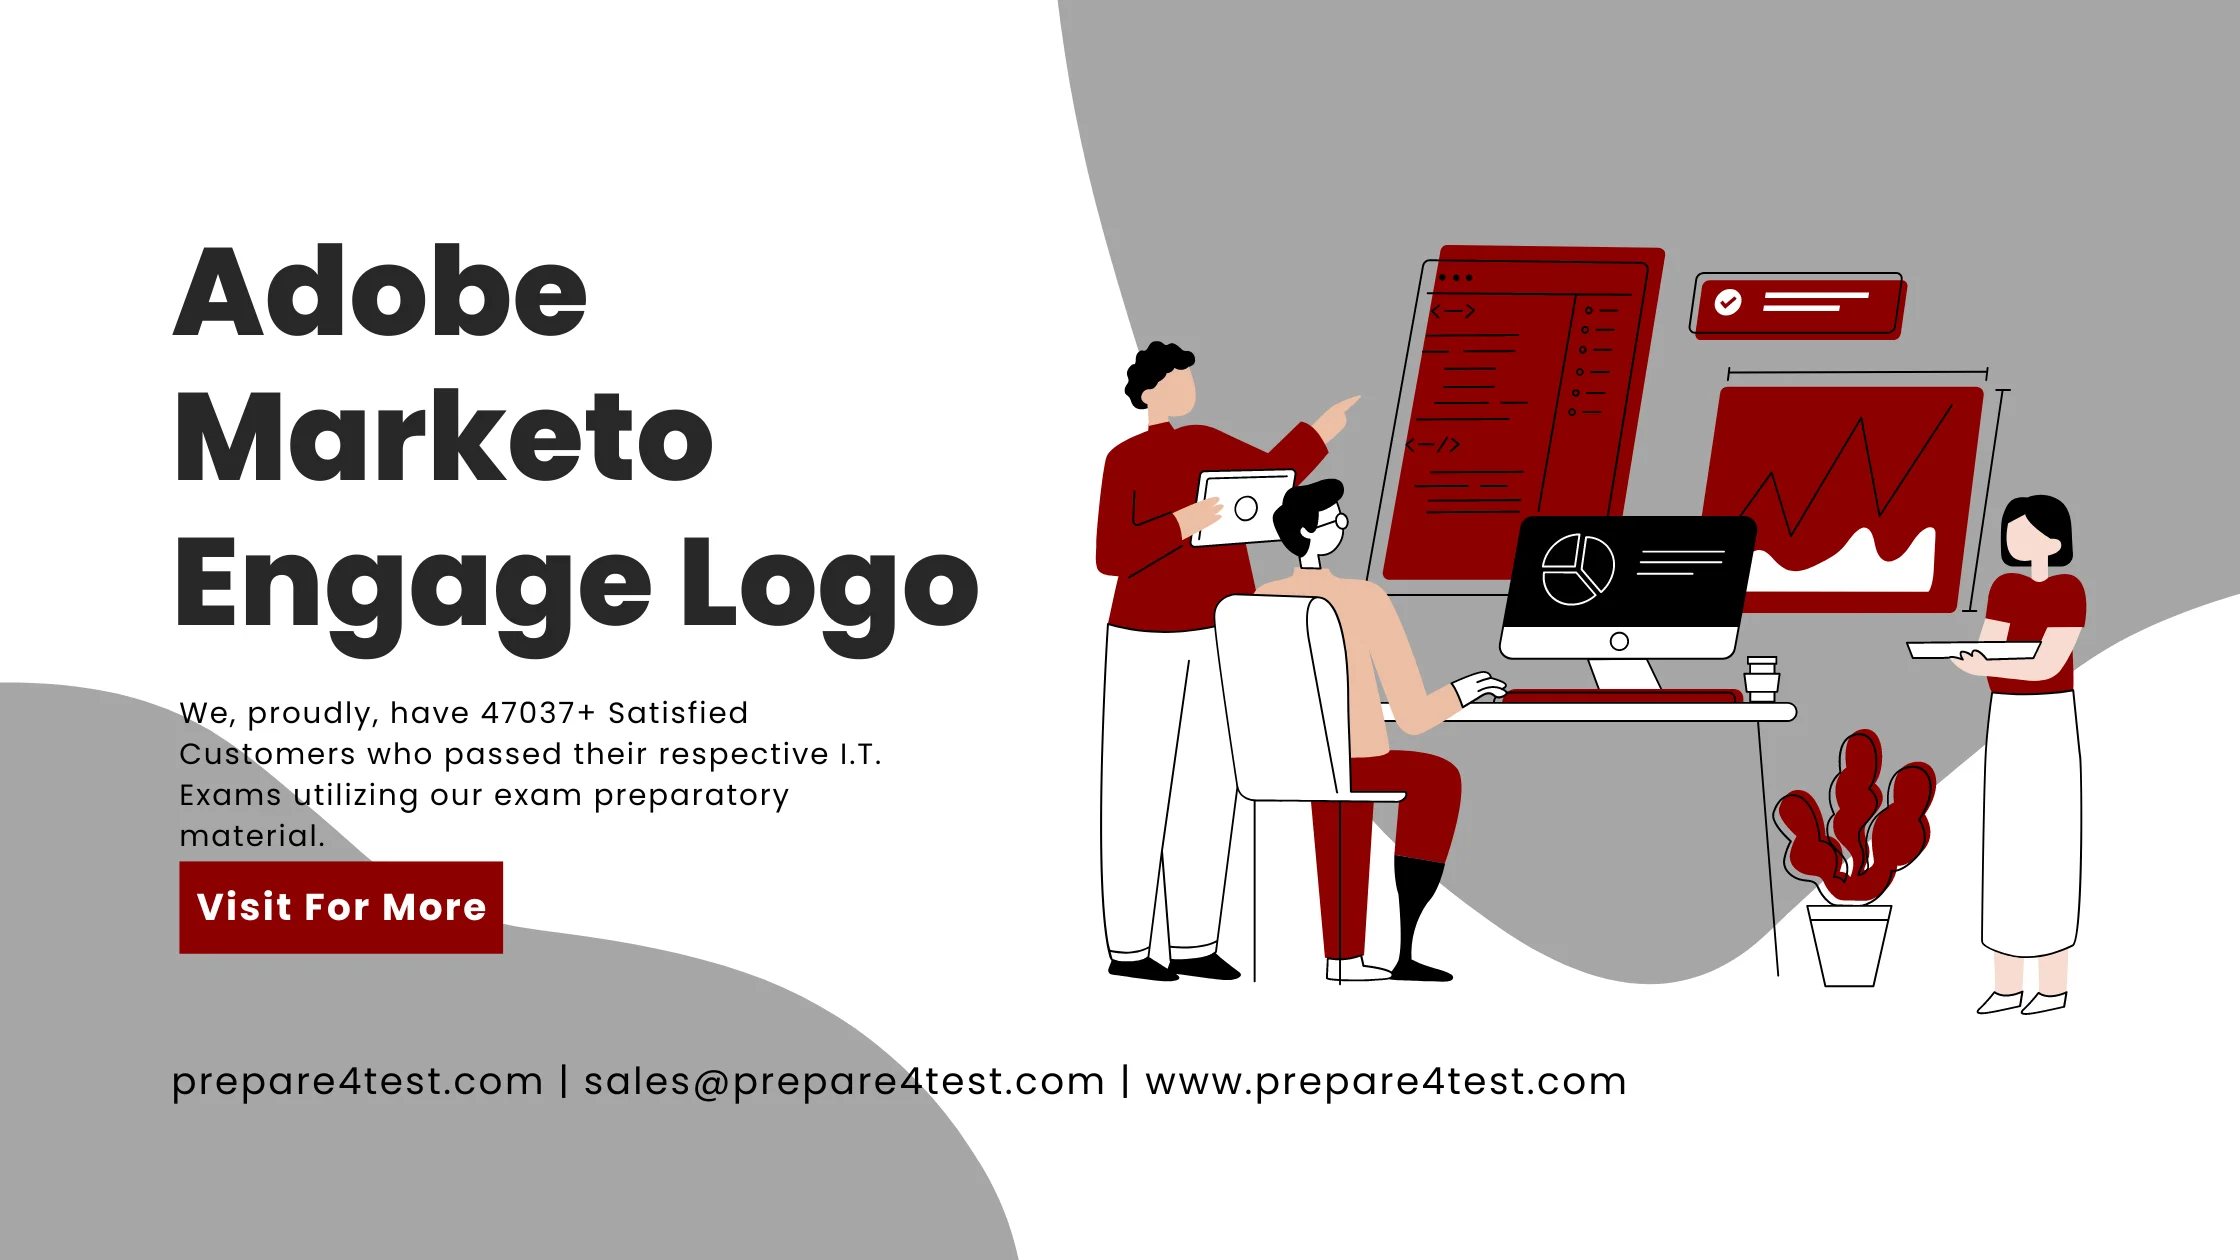 Adobe Marketo Engage Logo success